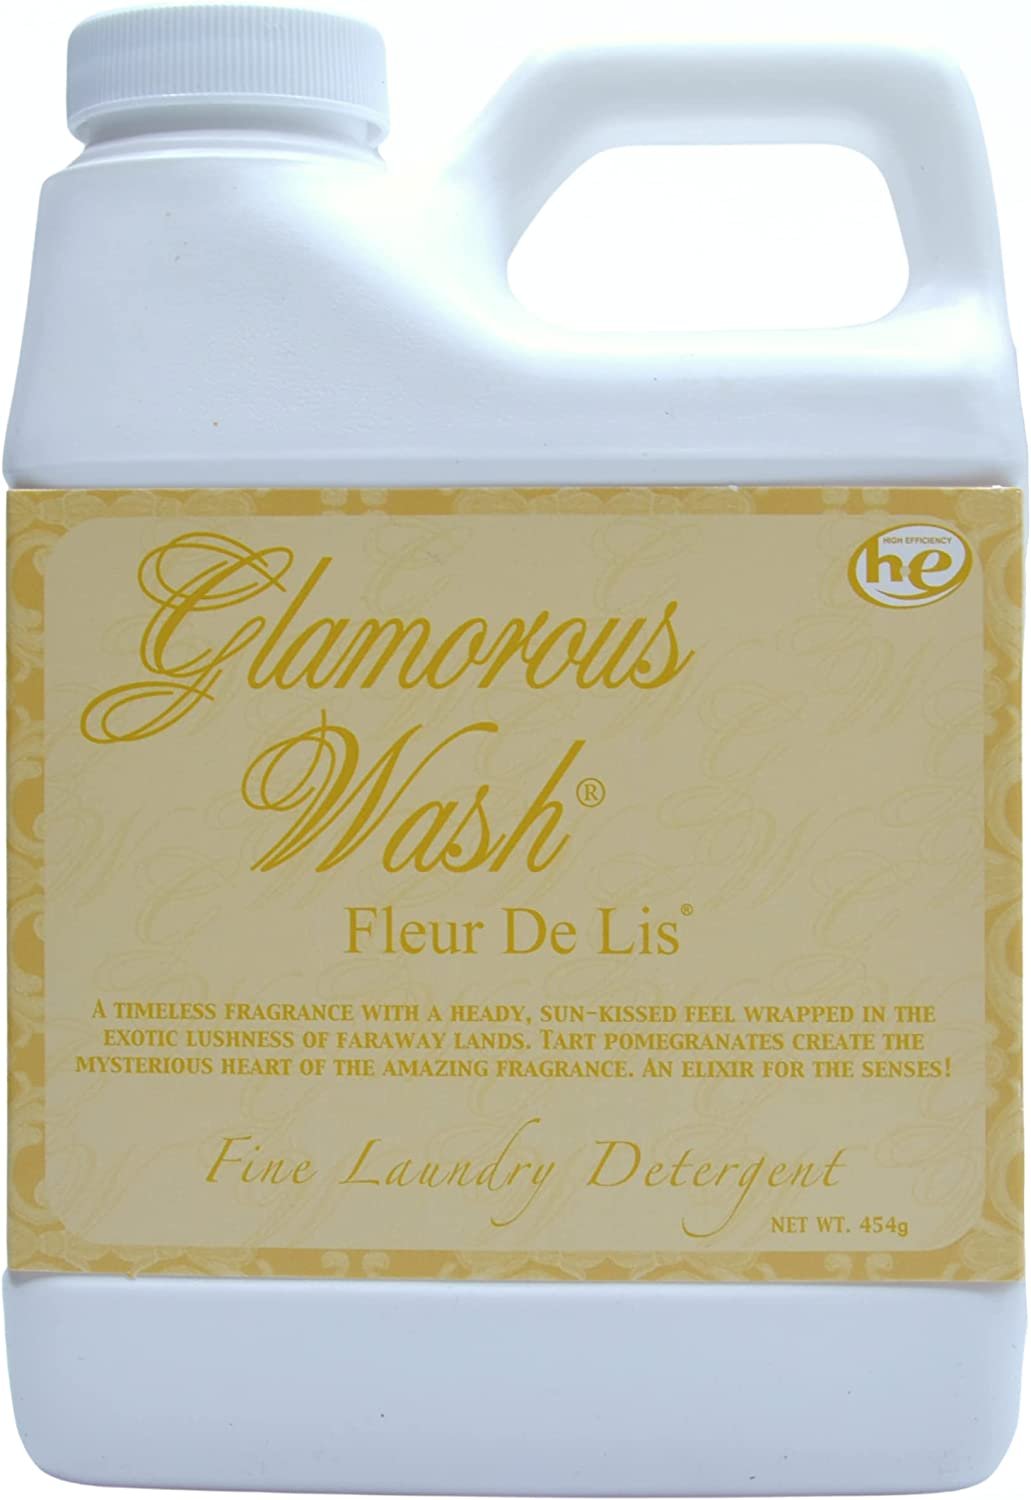 Tyler Candle Company Glamorous Wash Fleur De Lis Fine Laundry Detergent - Liquid Detergent Designed for Clothing - Hand and Machine Washable - 16 Fl Oz / 454 Gram Container